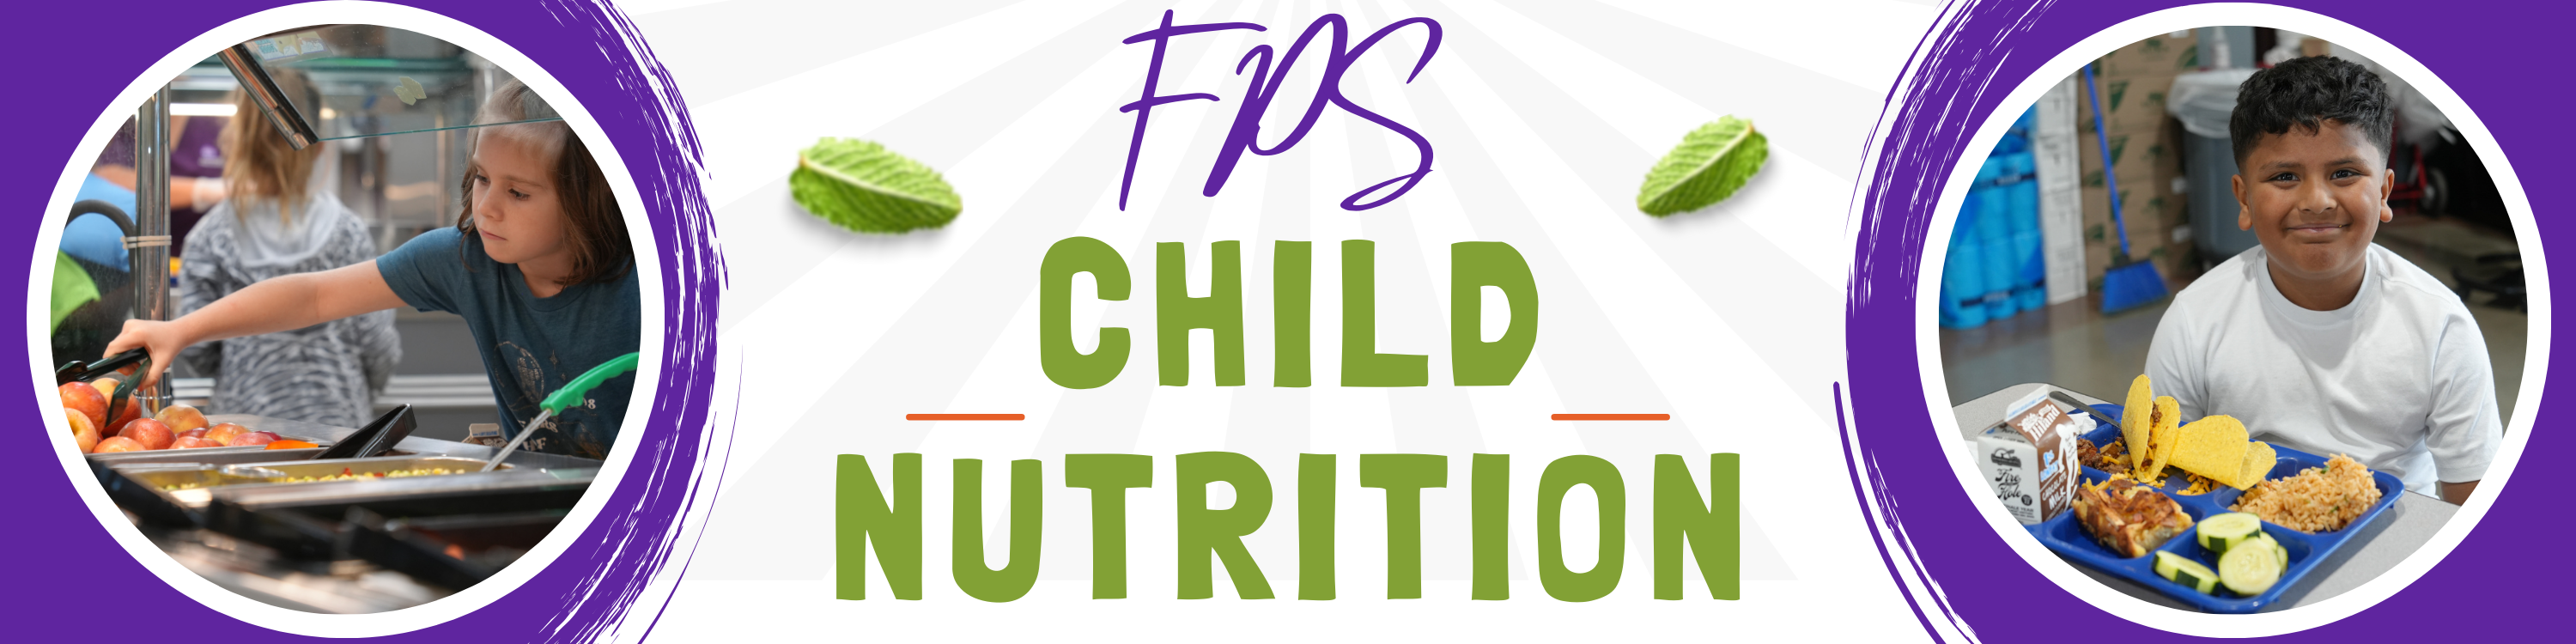 FPS Child Nutrition Banner